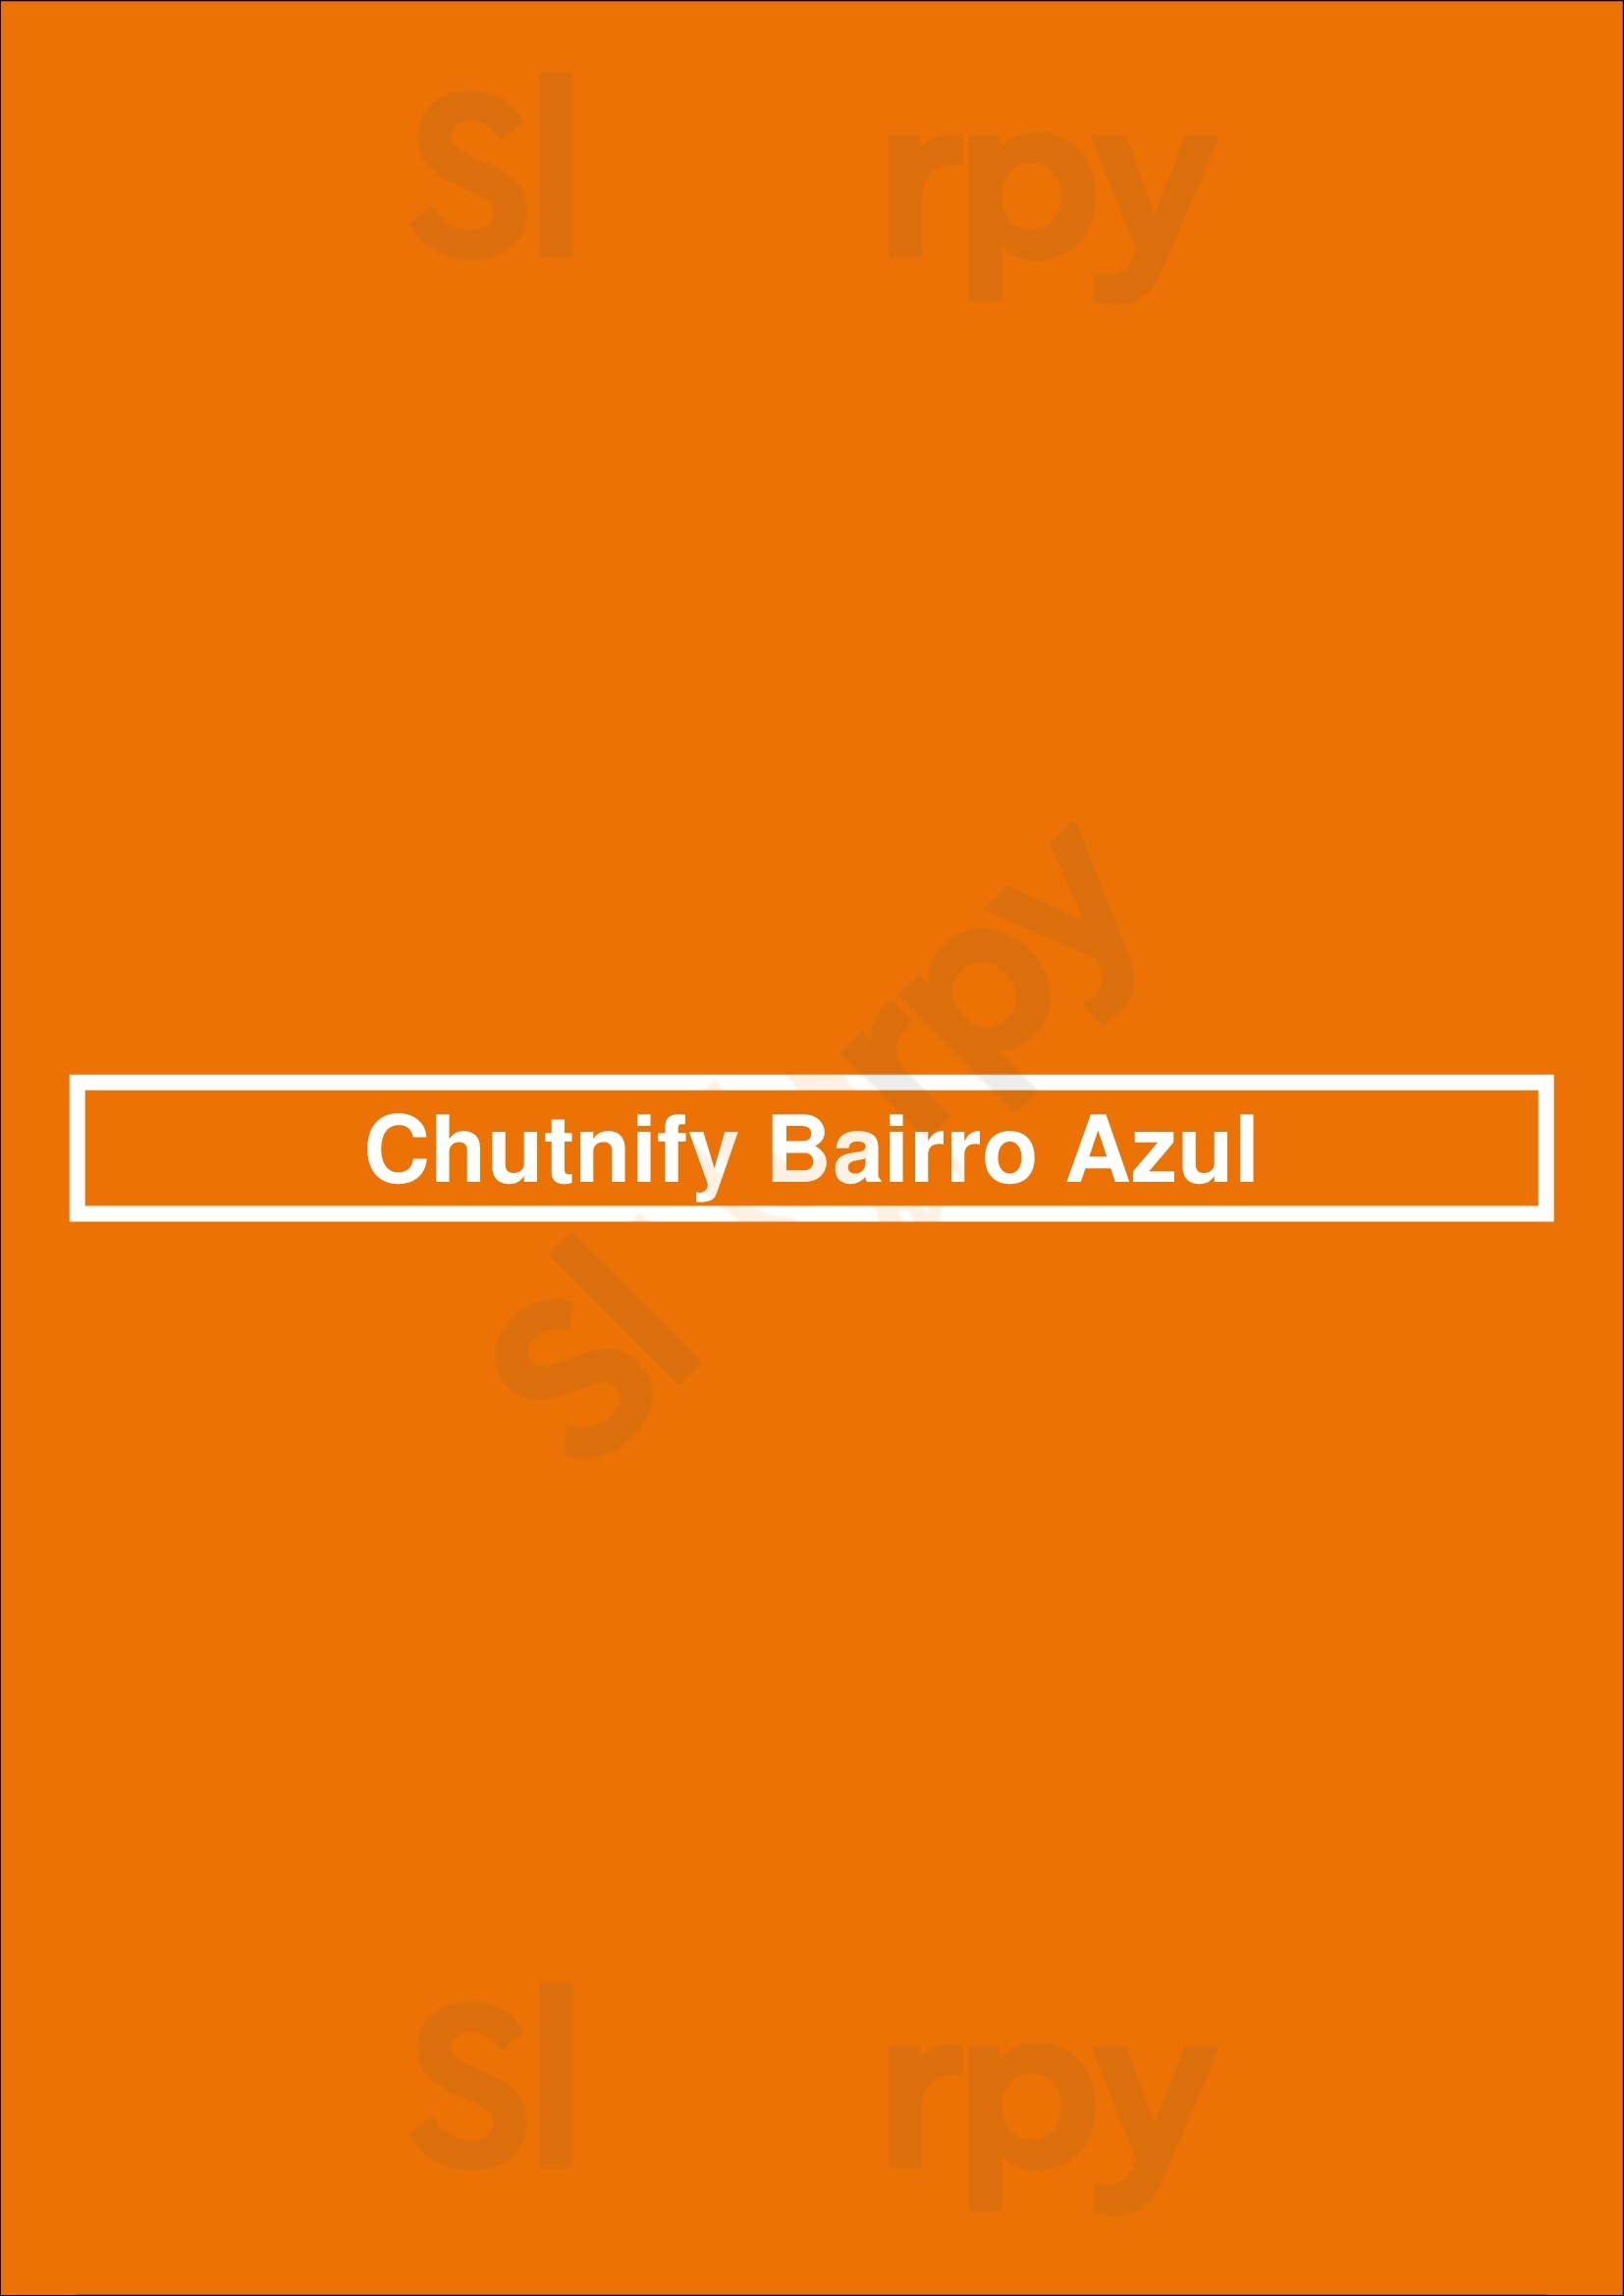 Chutnify Bairro Azul Lisboa Menu - 1